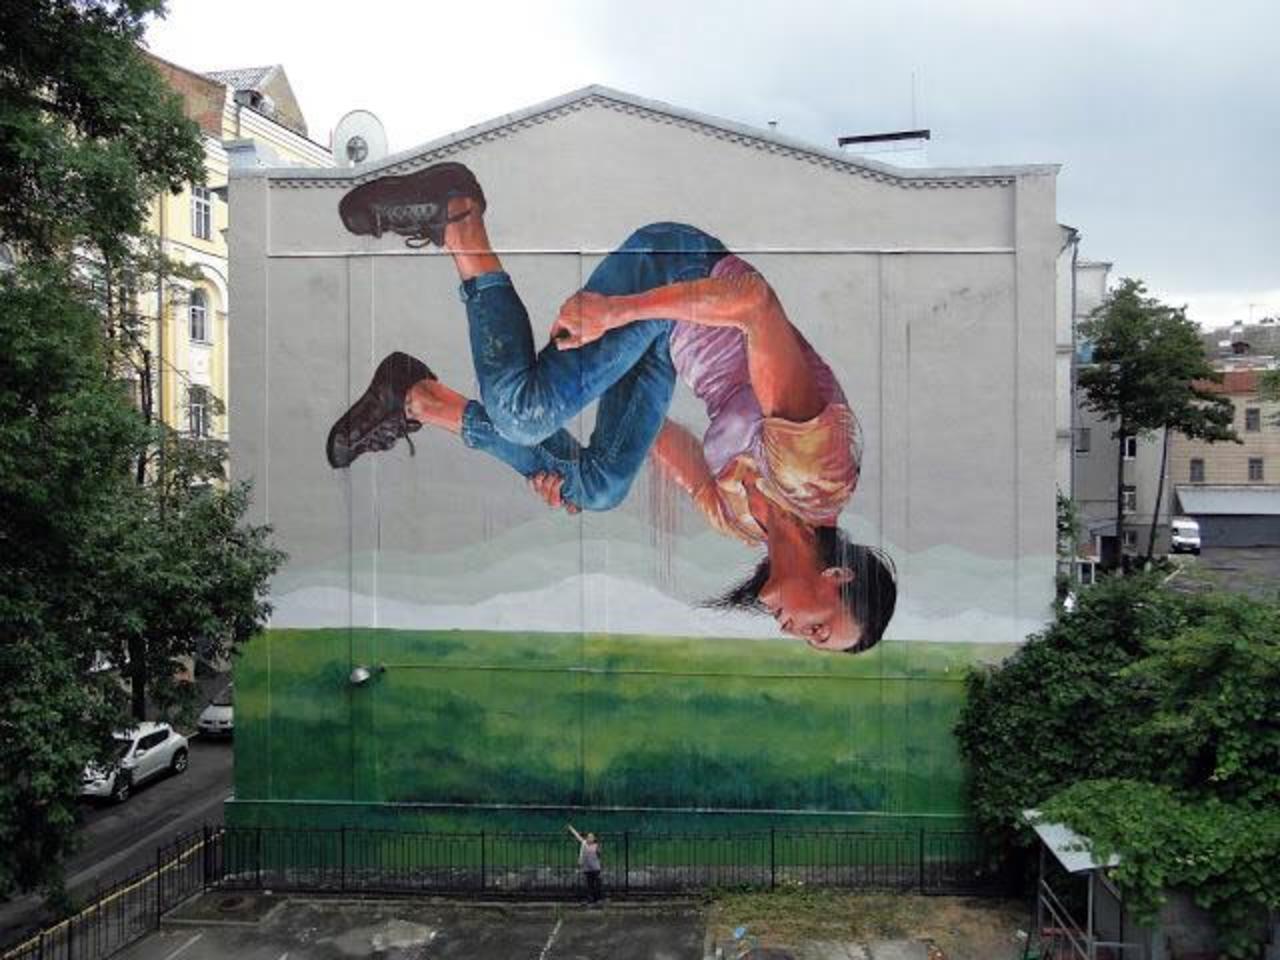 RT @richardbanfa: The #Dreamer by Fintan Magee in #Kiev #Ukraine #streetart #arte #art #mural #switch #graffiti #bedifferent http://t.co/wNd0I8jpp0